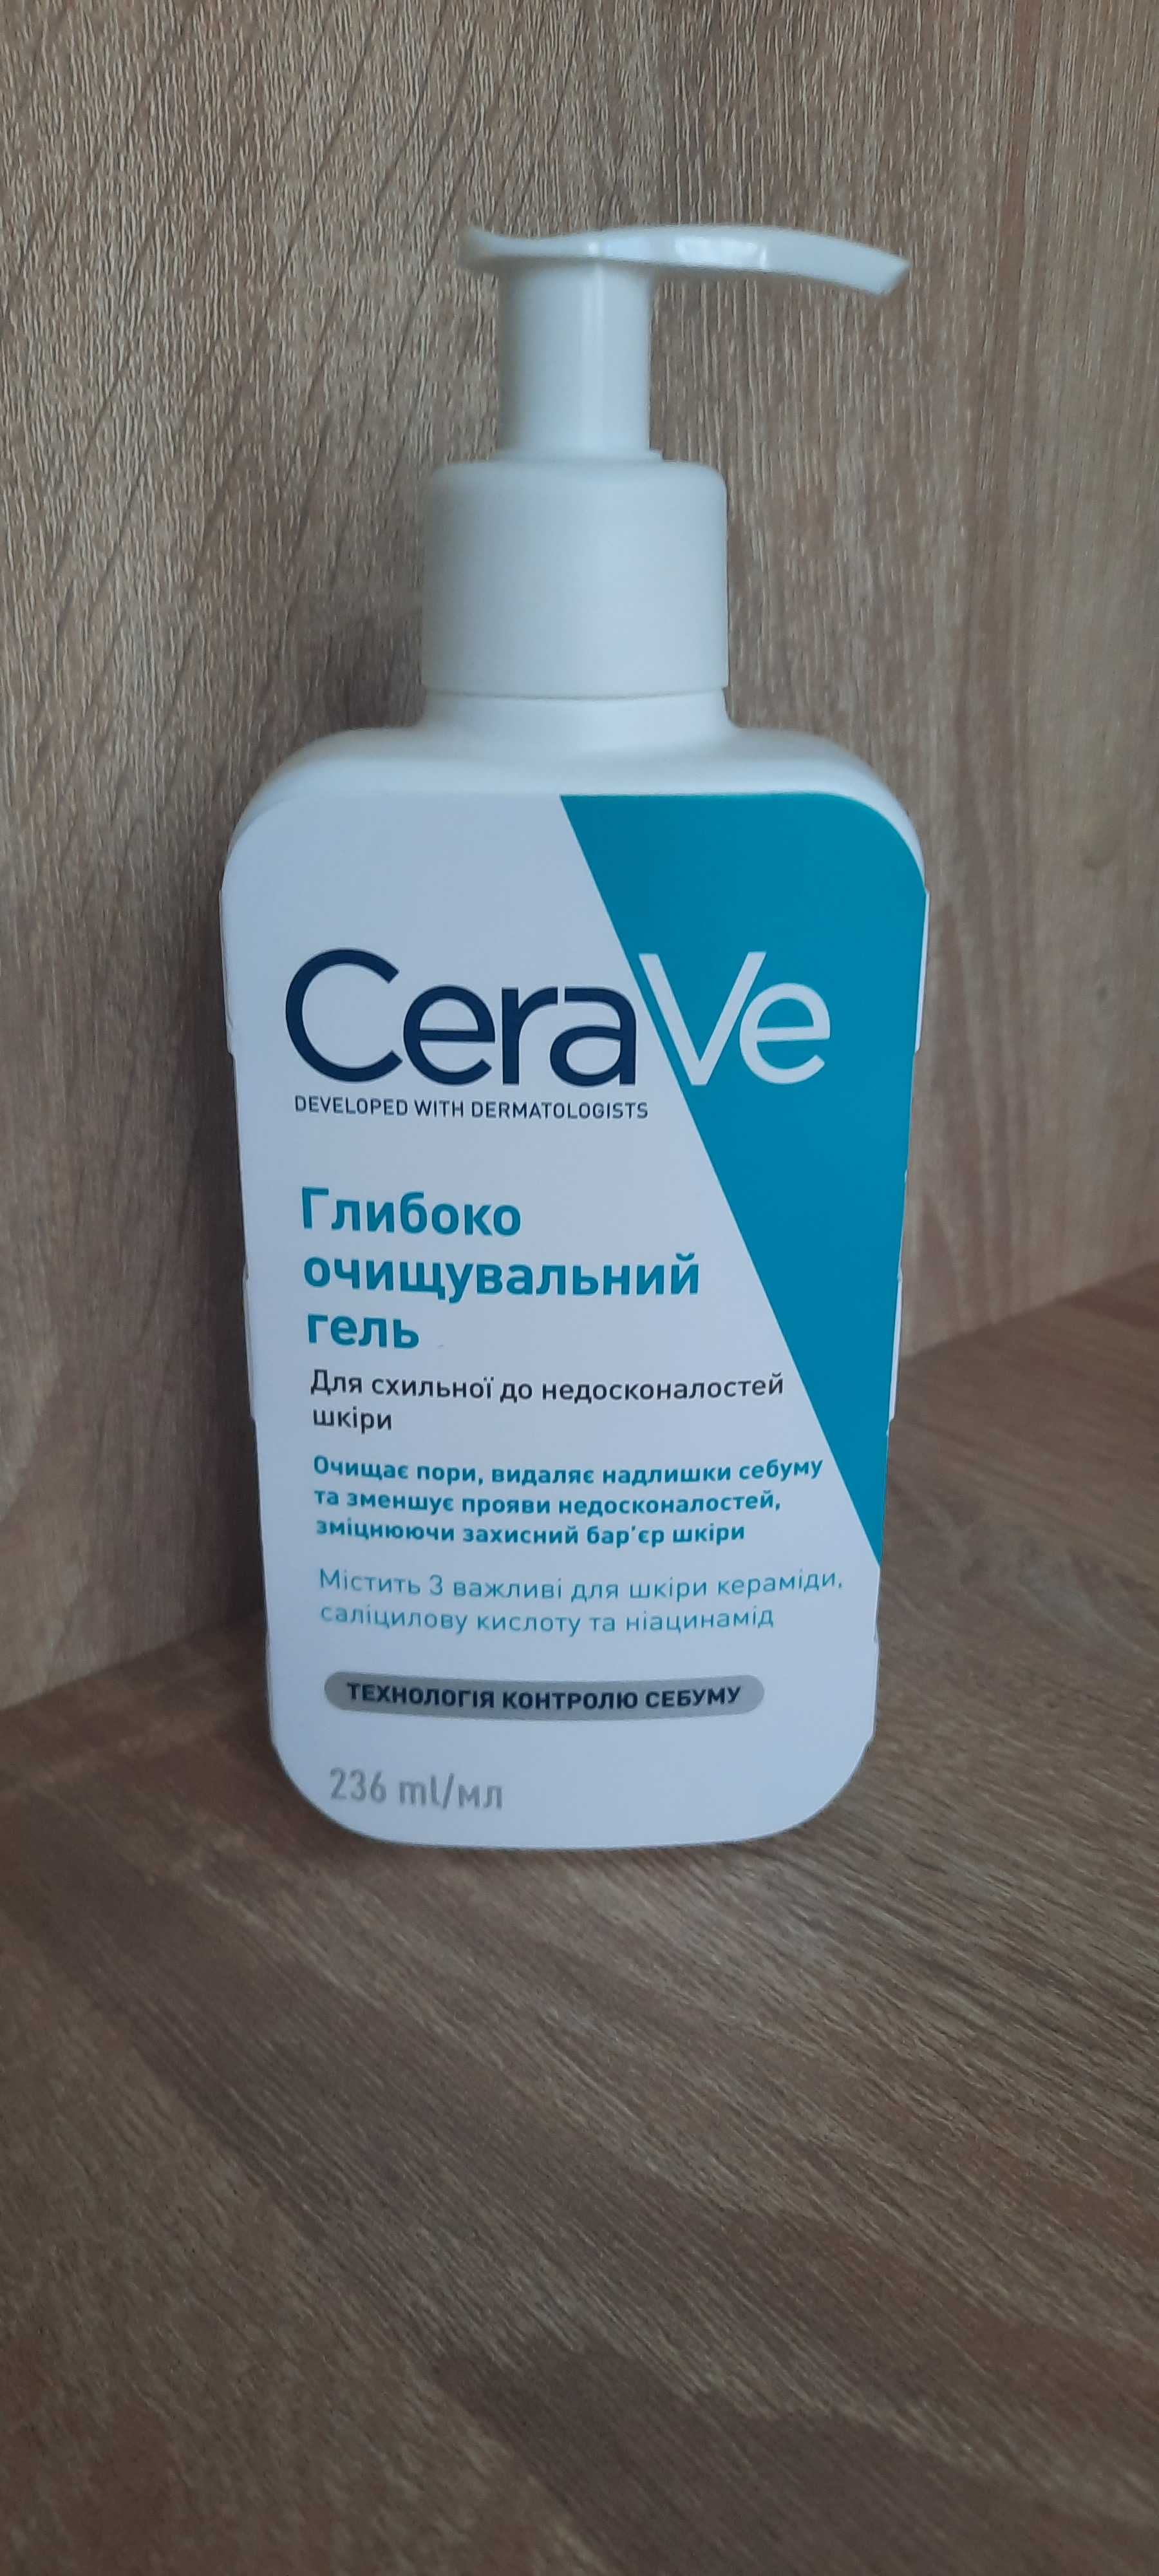 Глибоко очищувальний гель для схильної до недосконалостей шкіри CeraVe